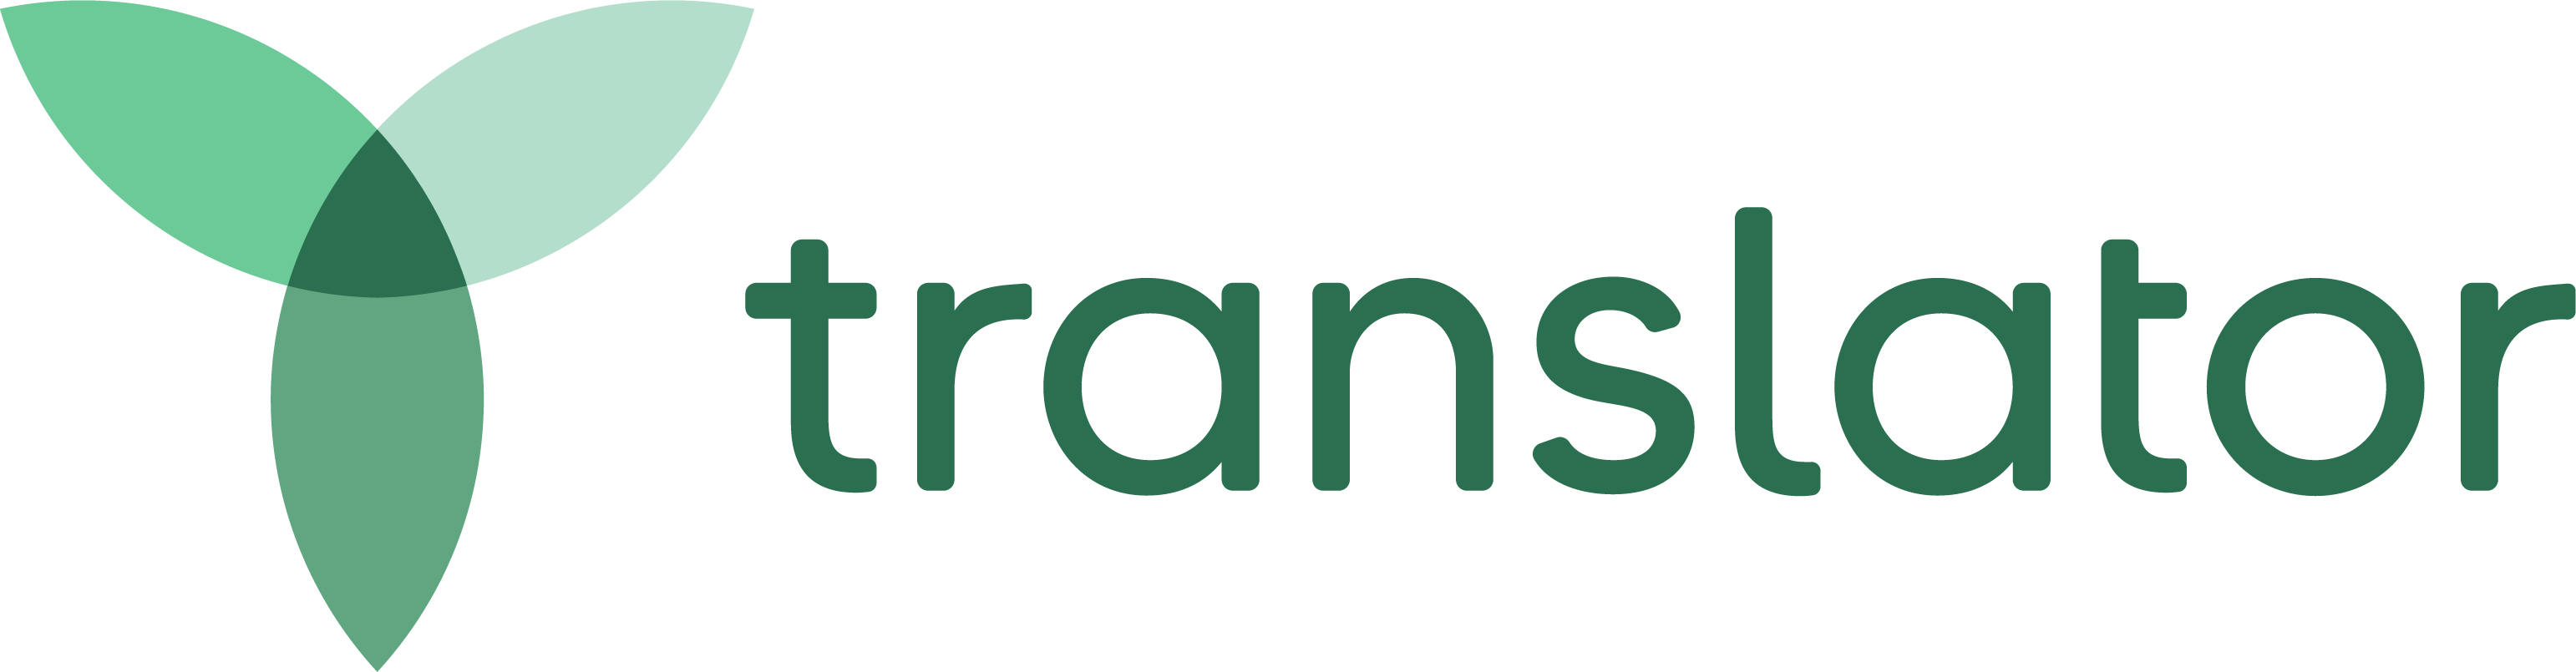 Translator company logo - https://www.translator.company/